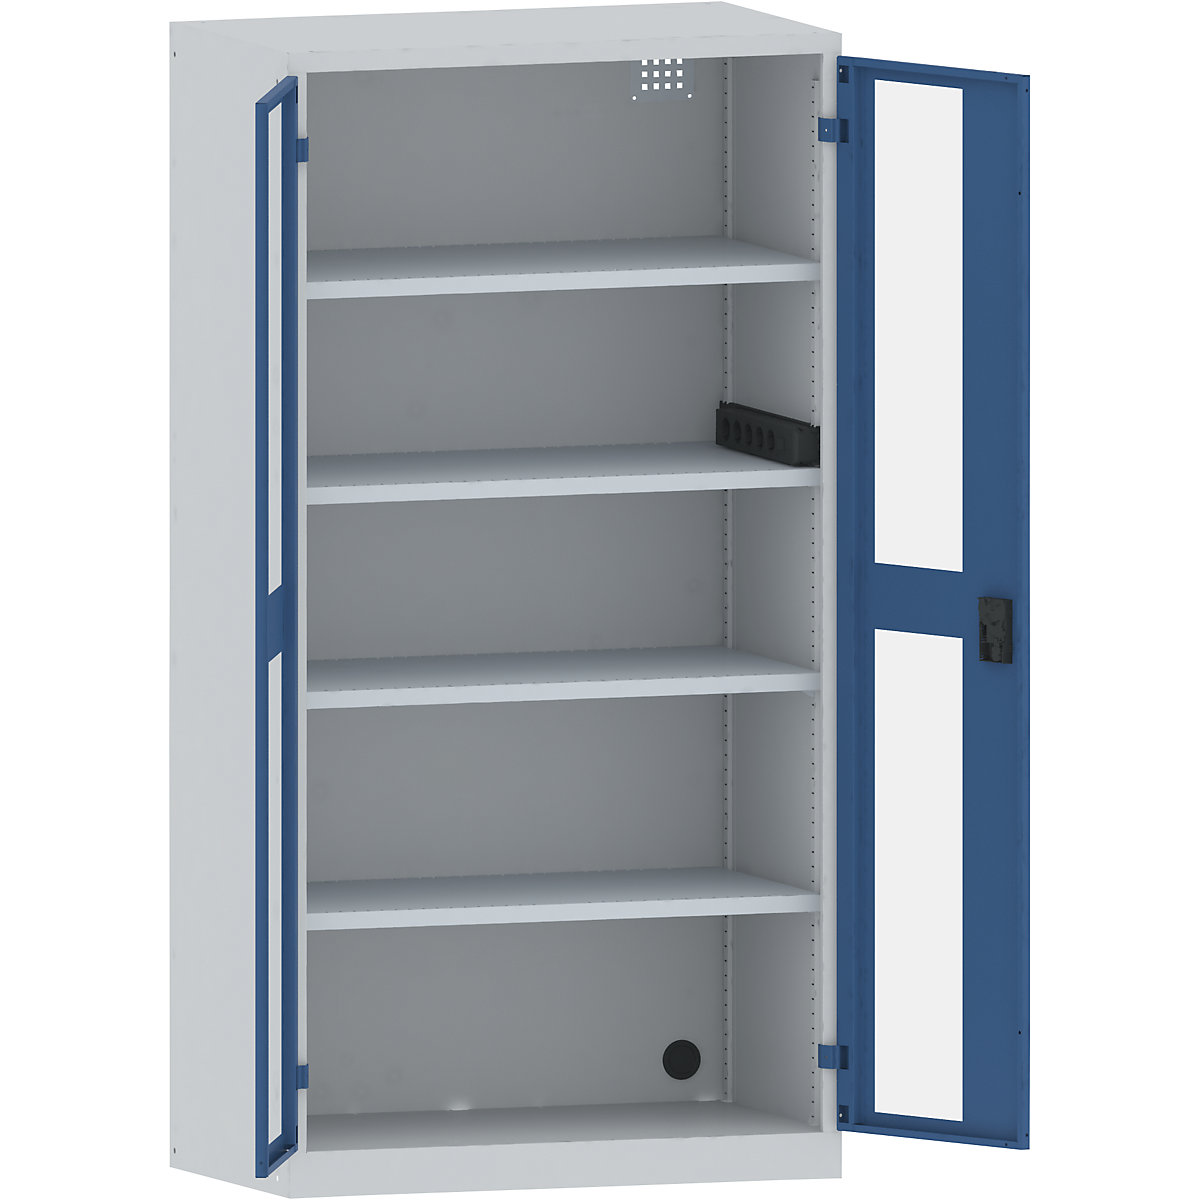 Battery charging cabinet – LISTA, 4 shelves, vision panel doors, power strip at side, grey / blue-13